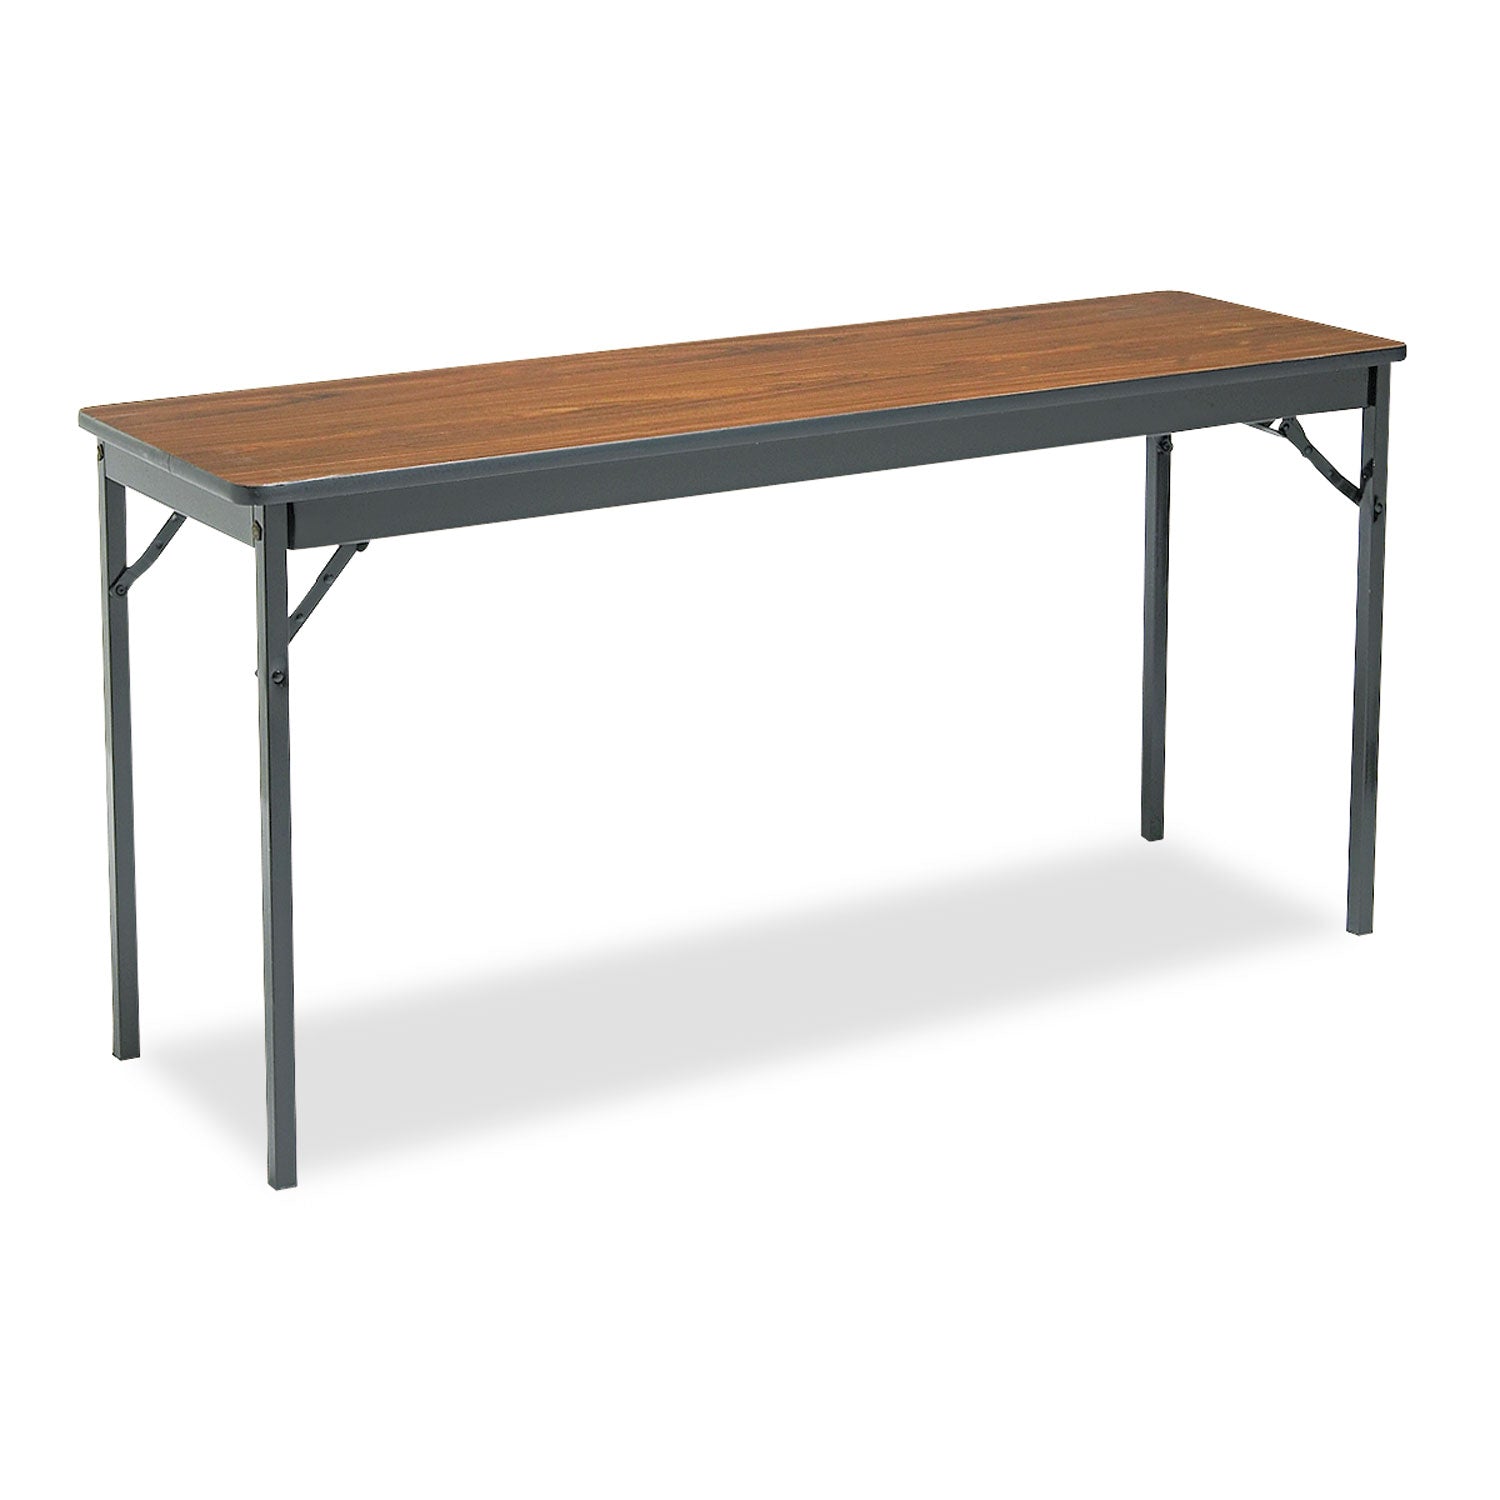 Special Size Folding Table, Rectangular, 60w x 18d x 30h, Walnut/Black - 